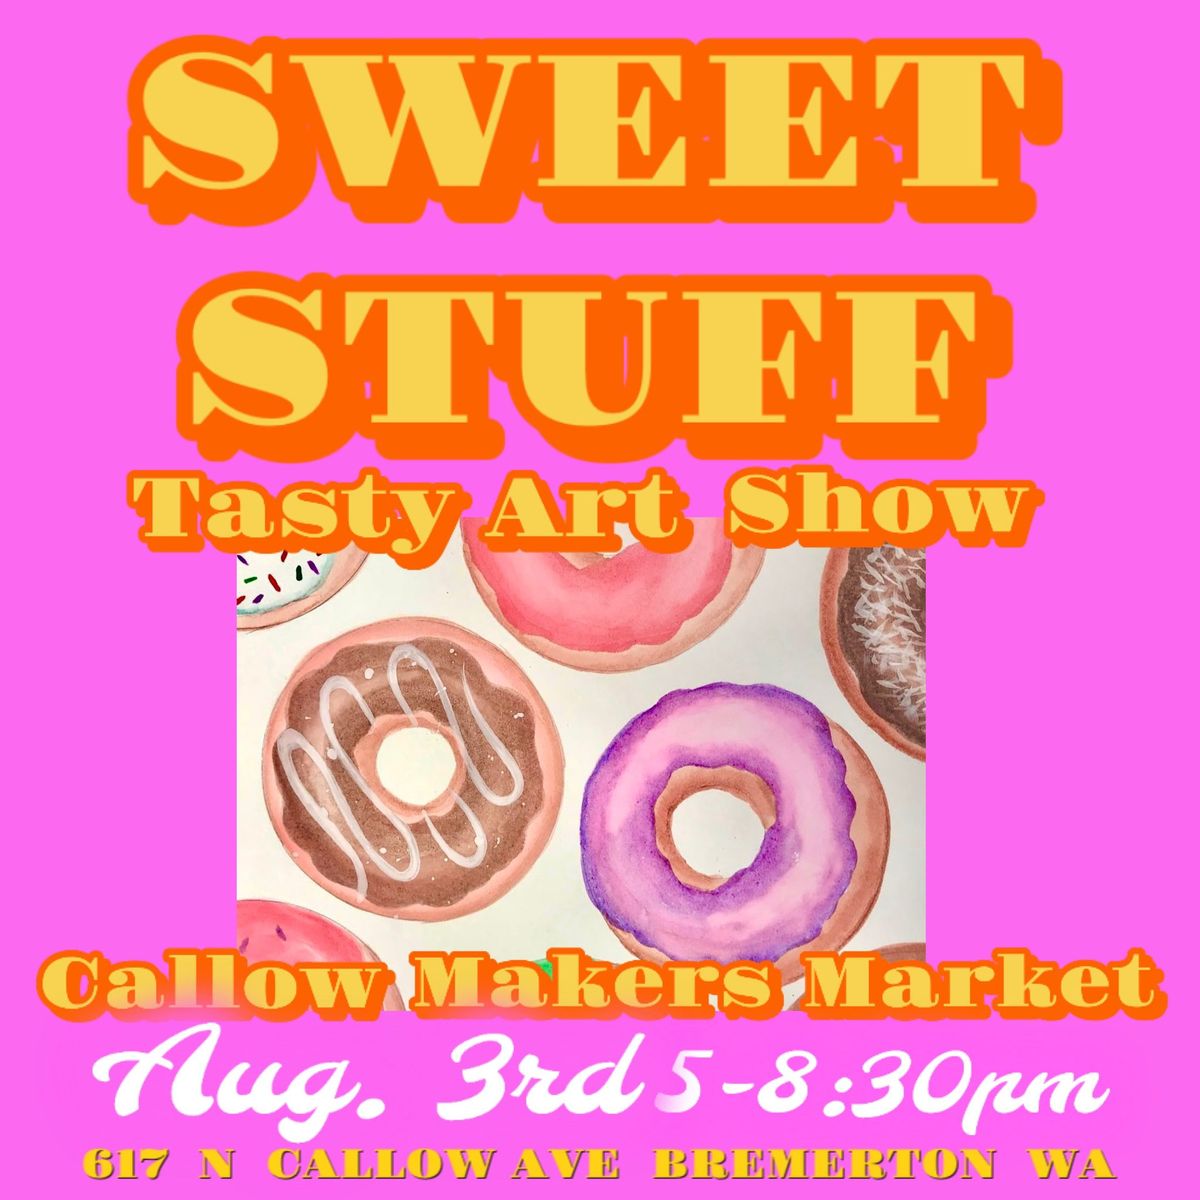 Sweet Stuff Tasty Art Show & Callow Makers Market